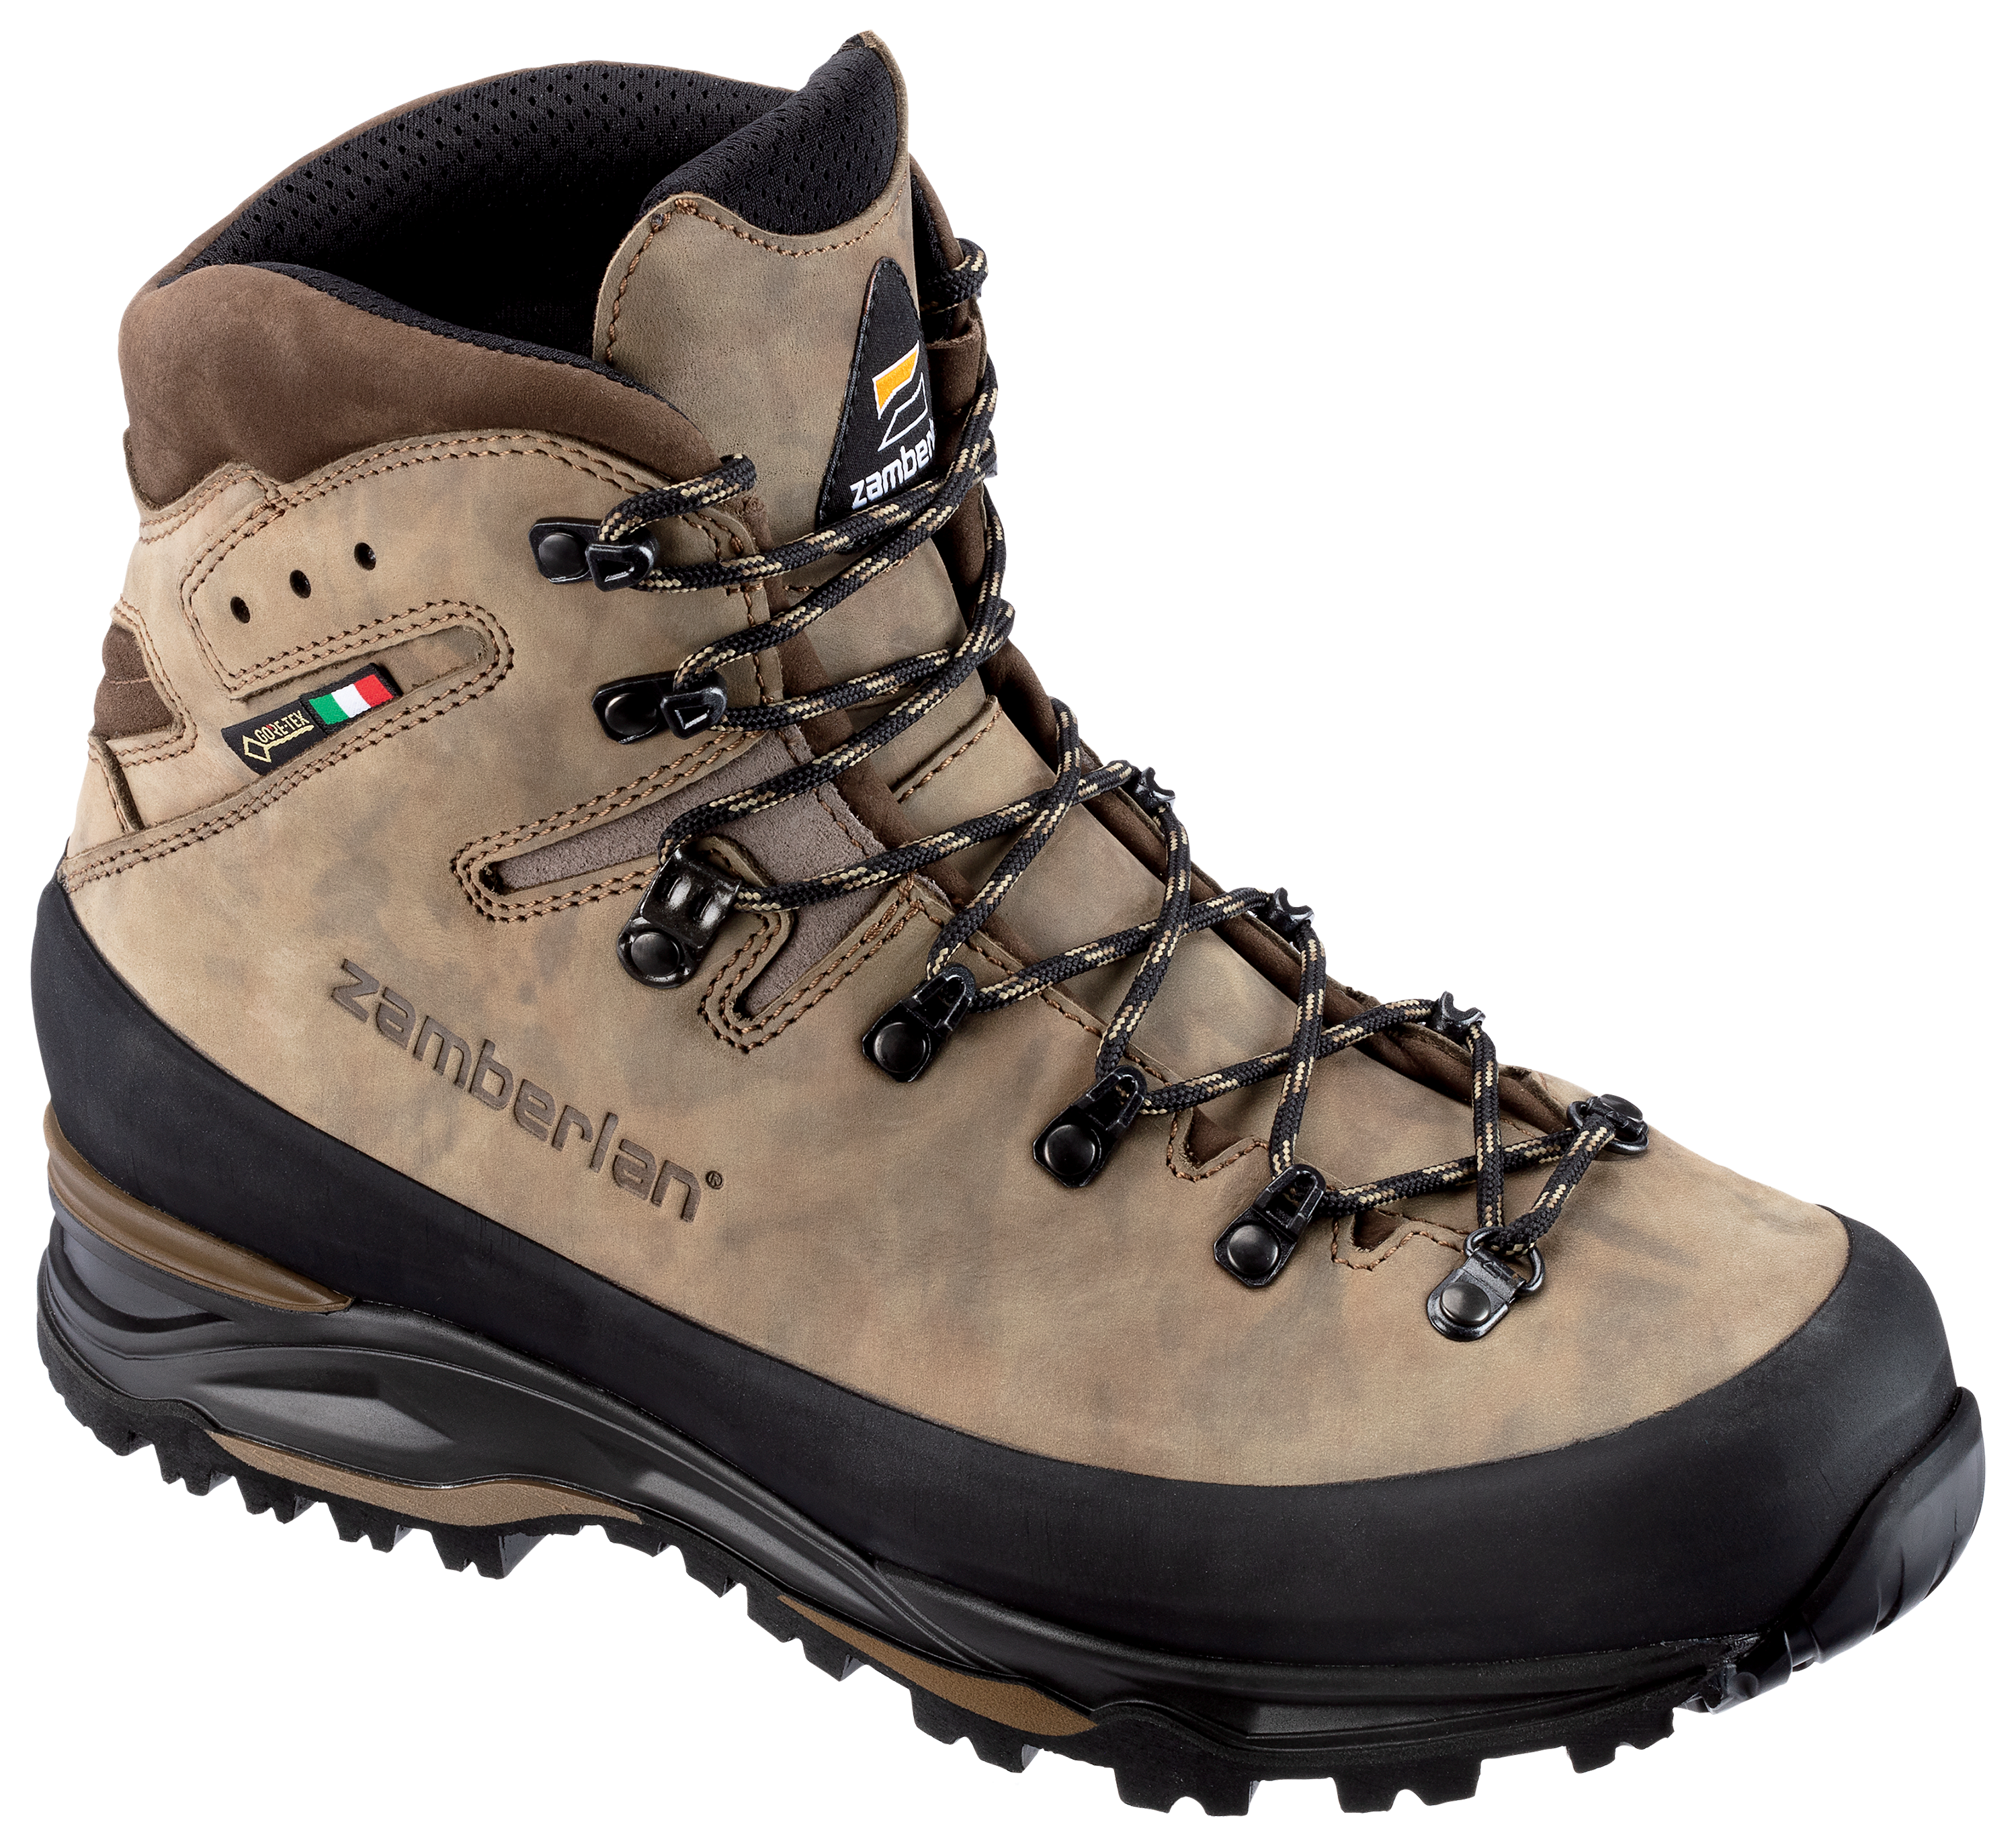 Zamberlan 960 Guide GORE-TEX RR Hunting Boots Men | Cabela's